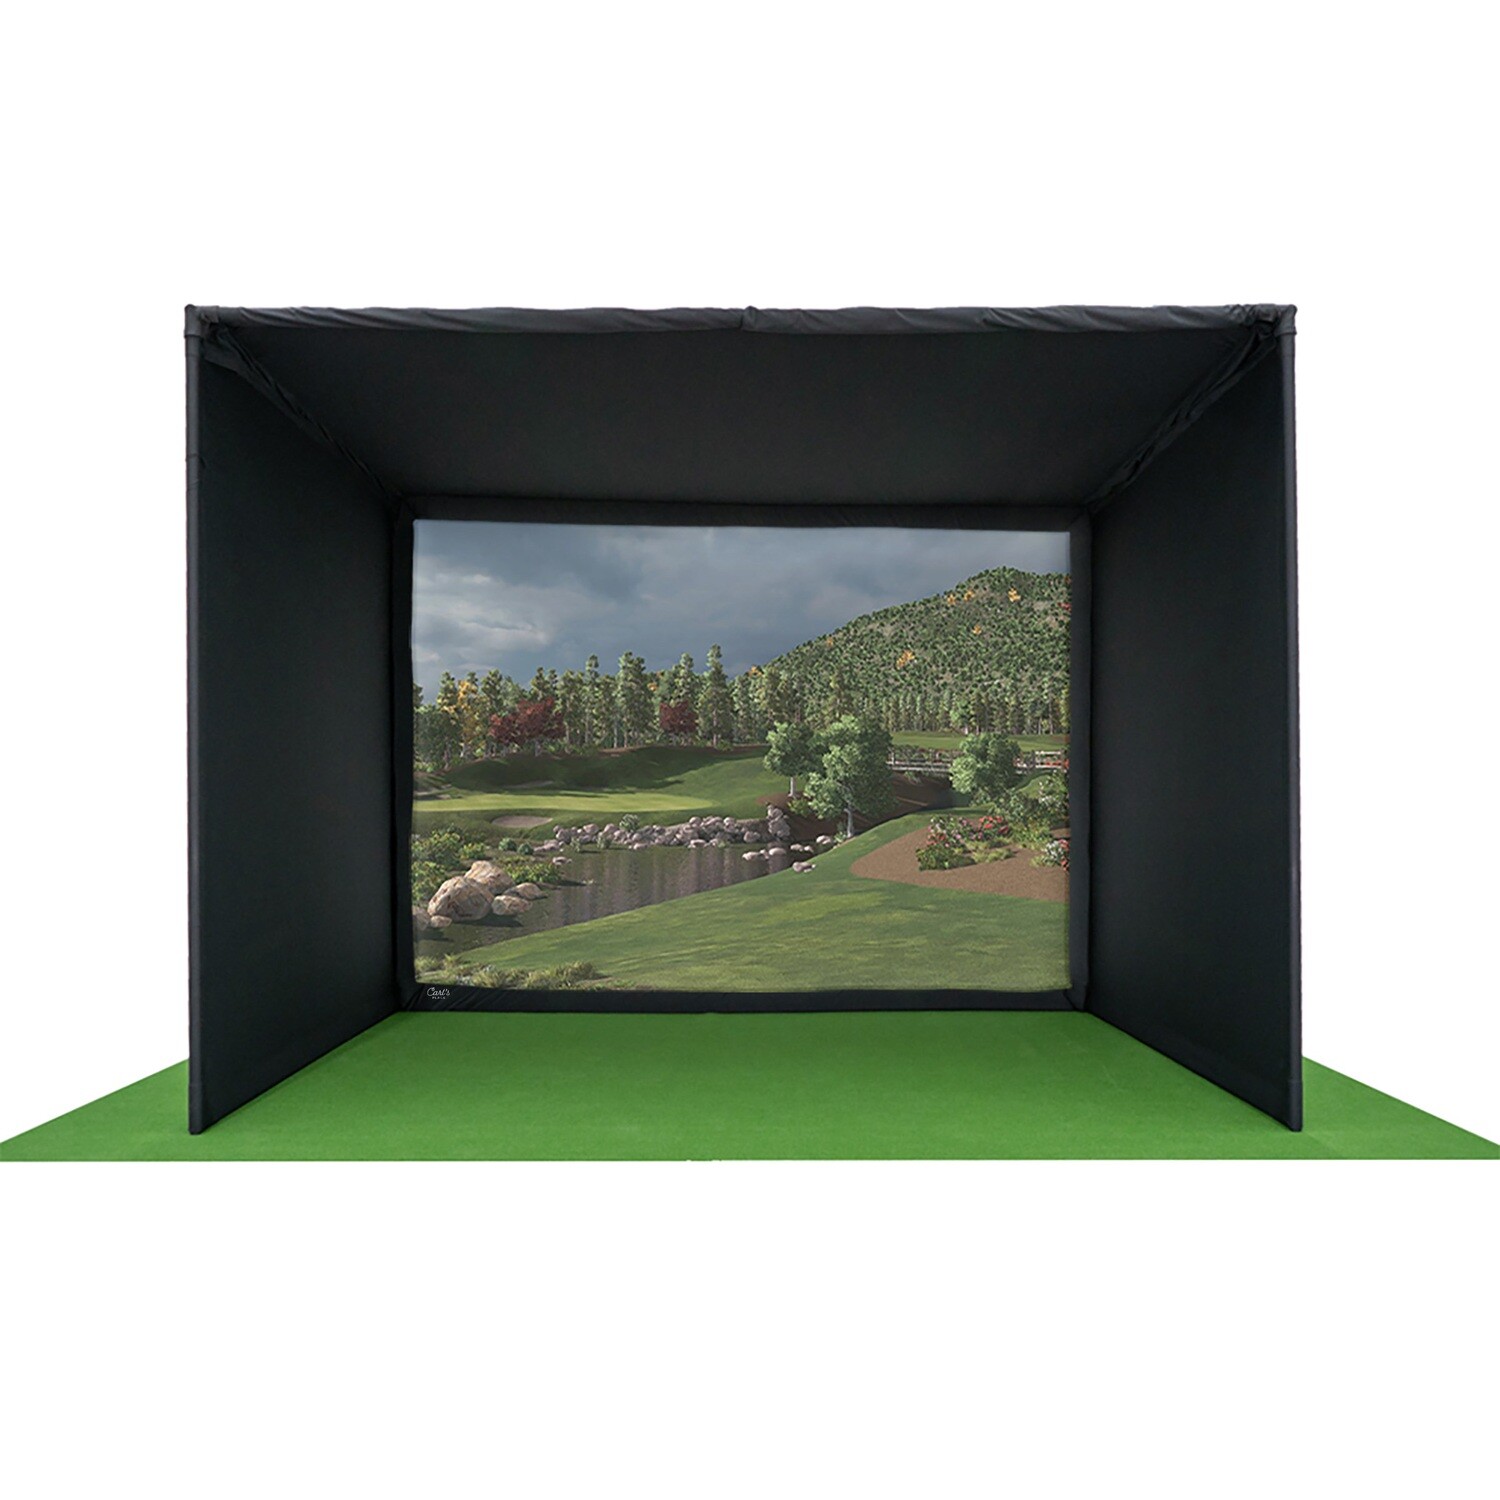 Pro Golf Simulator Enclosure Kit with Impact Screen